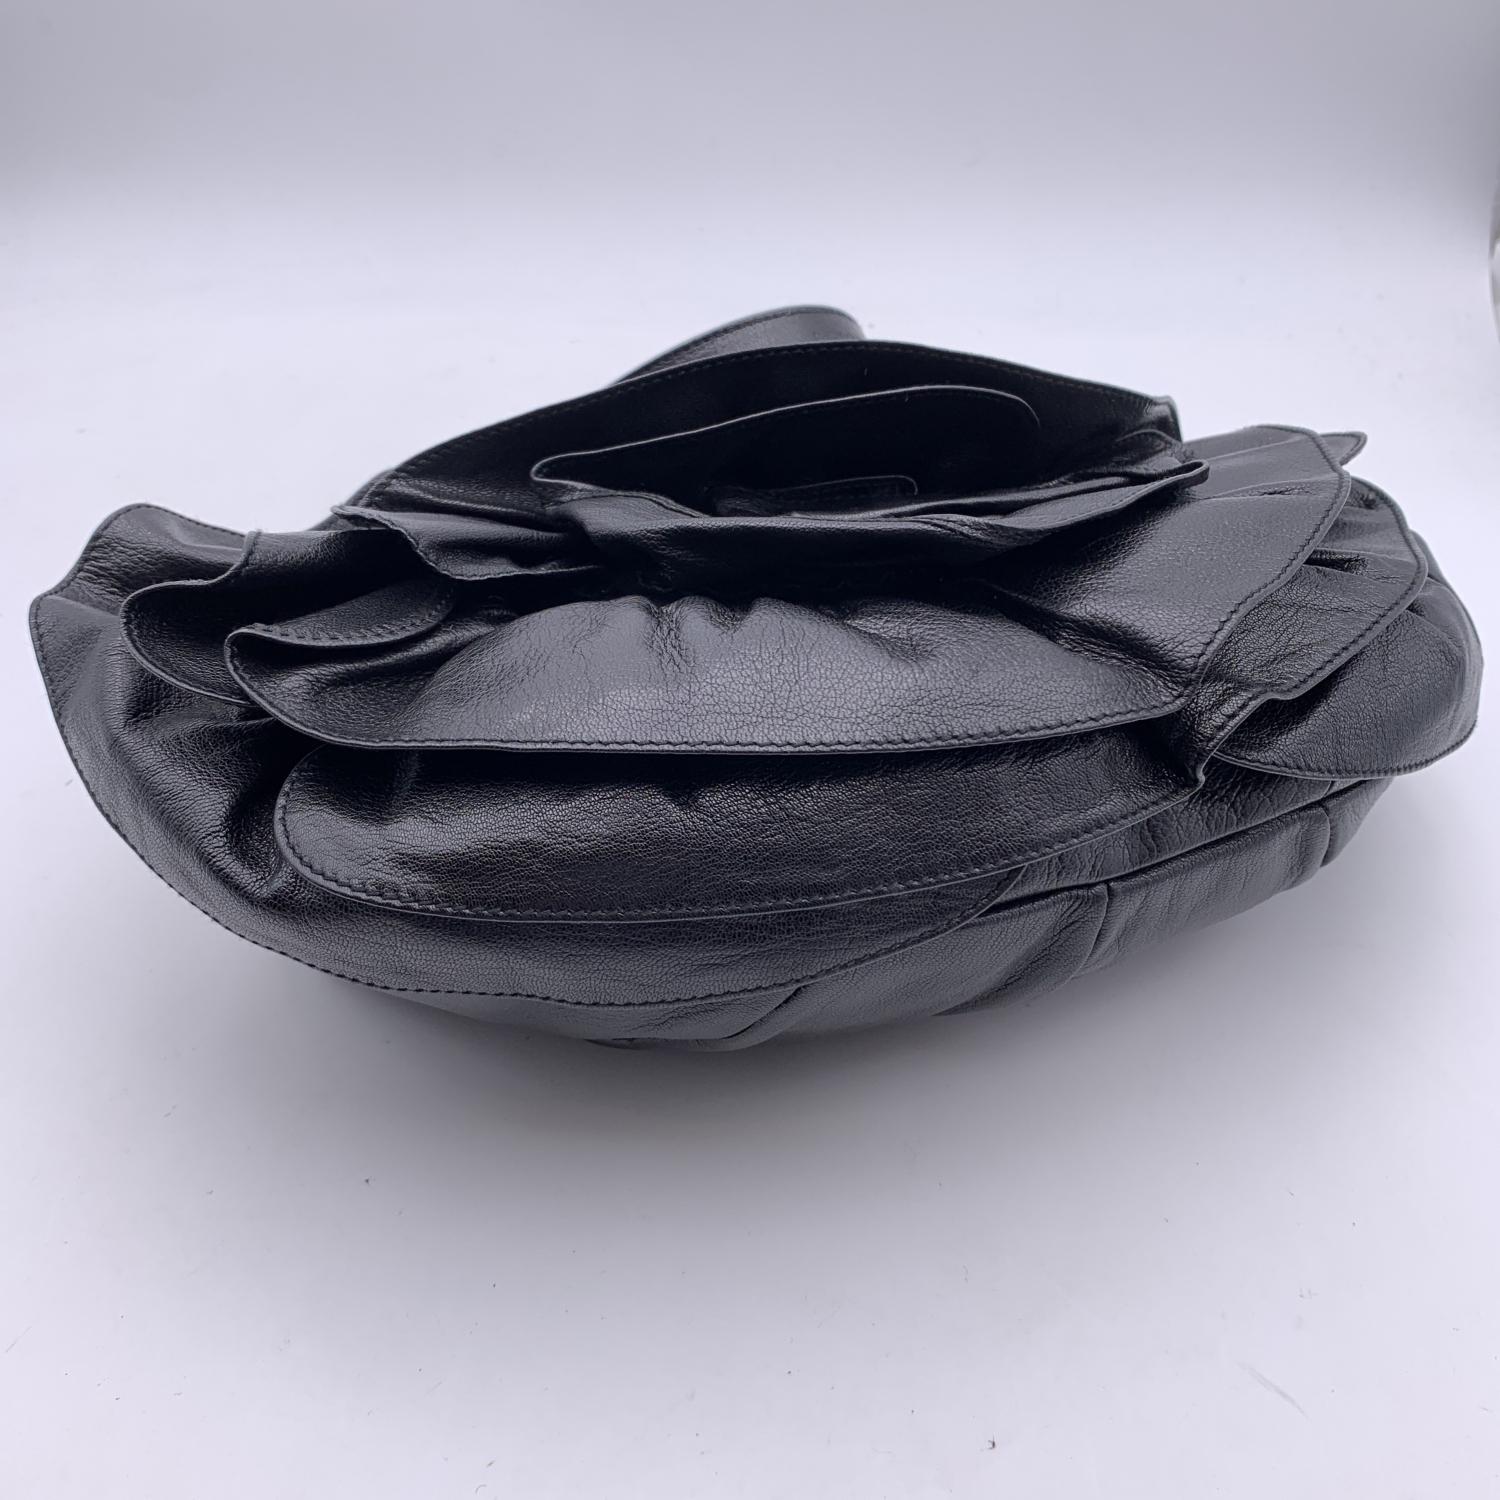 Yves Saint Laurent Black Ruffled Leather Hobo Shoulder Bag Tote 2